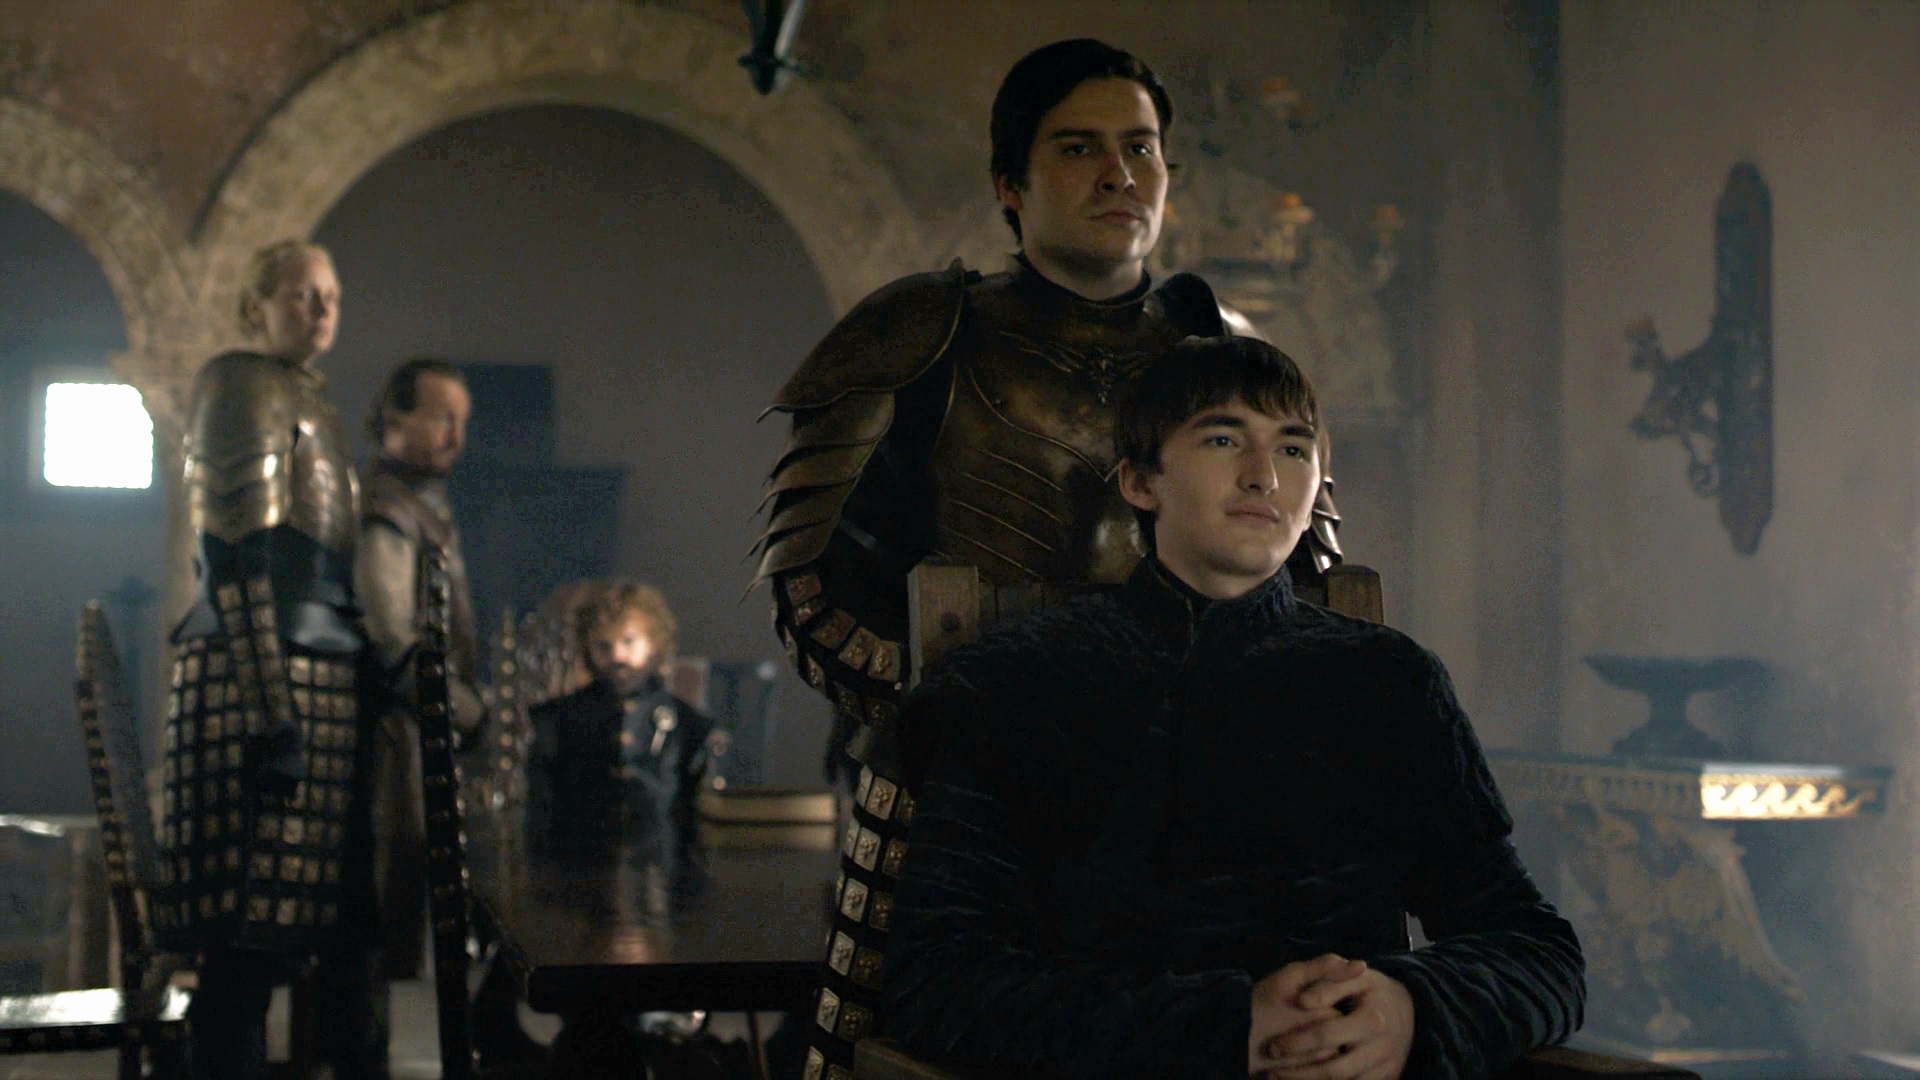 Bran Stark King Red Keep King's Landing Season 8 806 Iron Throne Podrick Brienne Bronn Tyrion